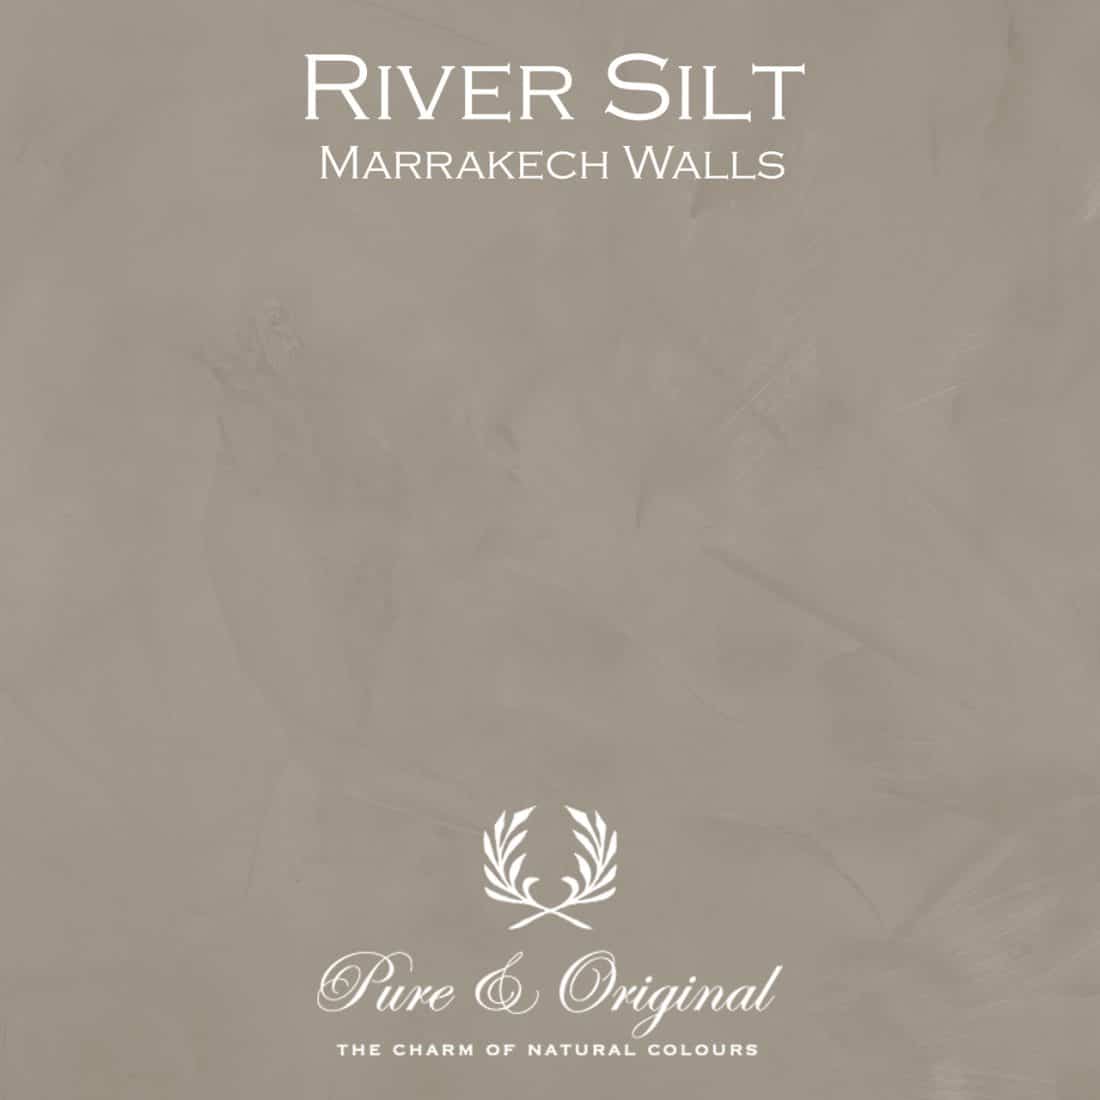 River Silt Marrakech Walls Pure Original